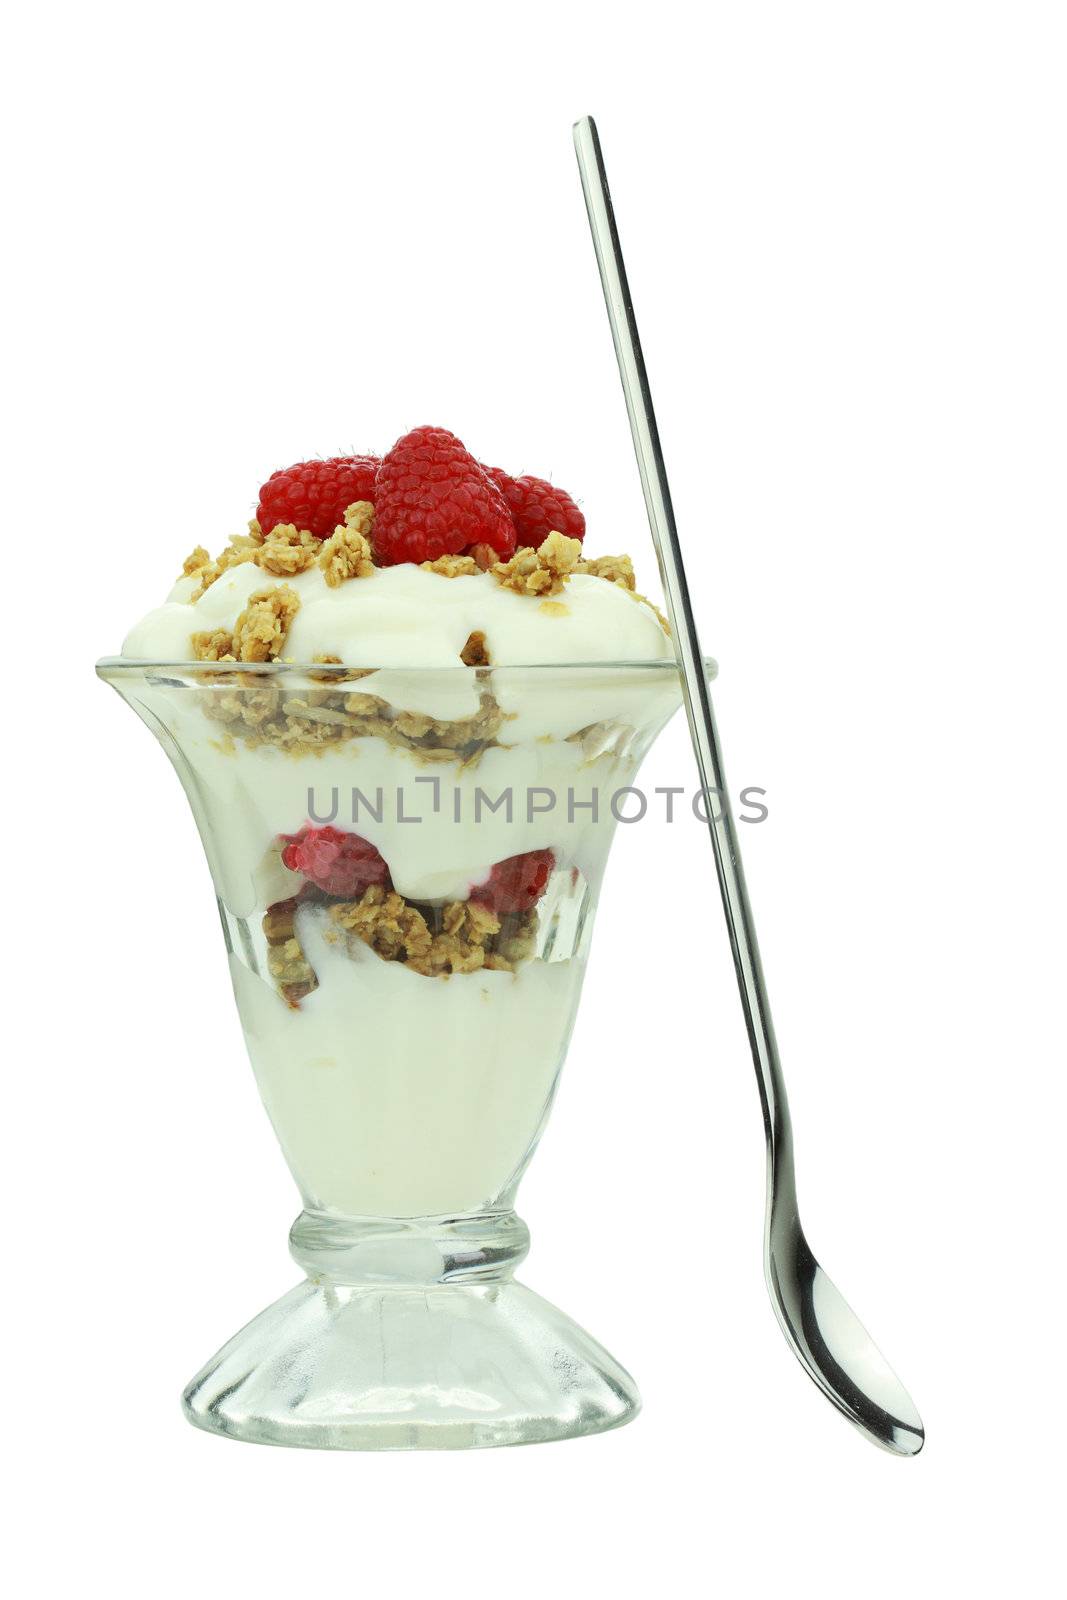 Fruit parfait with healthy granola, vanilla yogurt and fresh raspberries isolated on a white background.